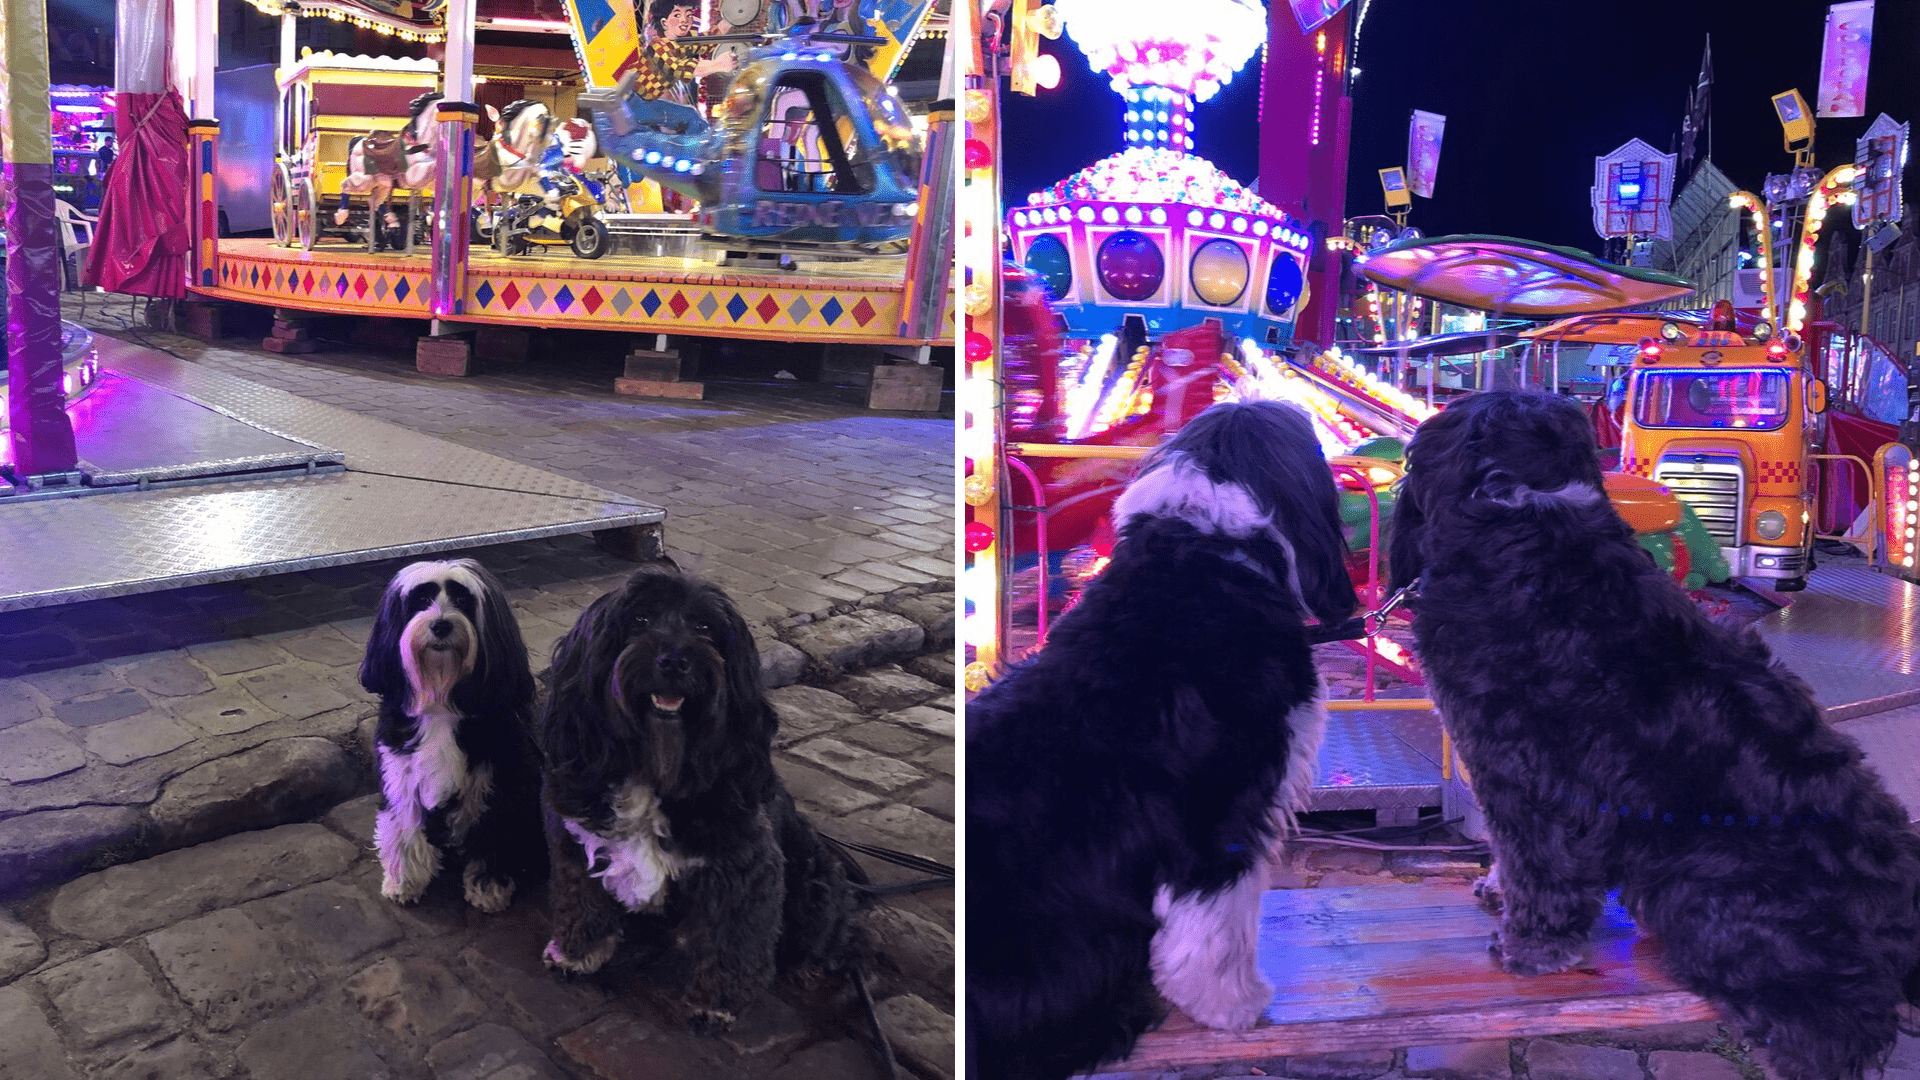 The dogs enjoying the street fair in Arras